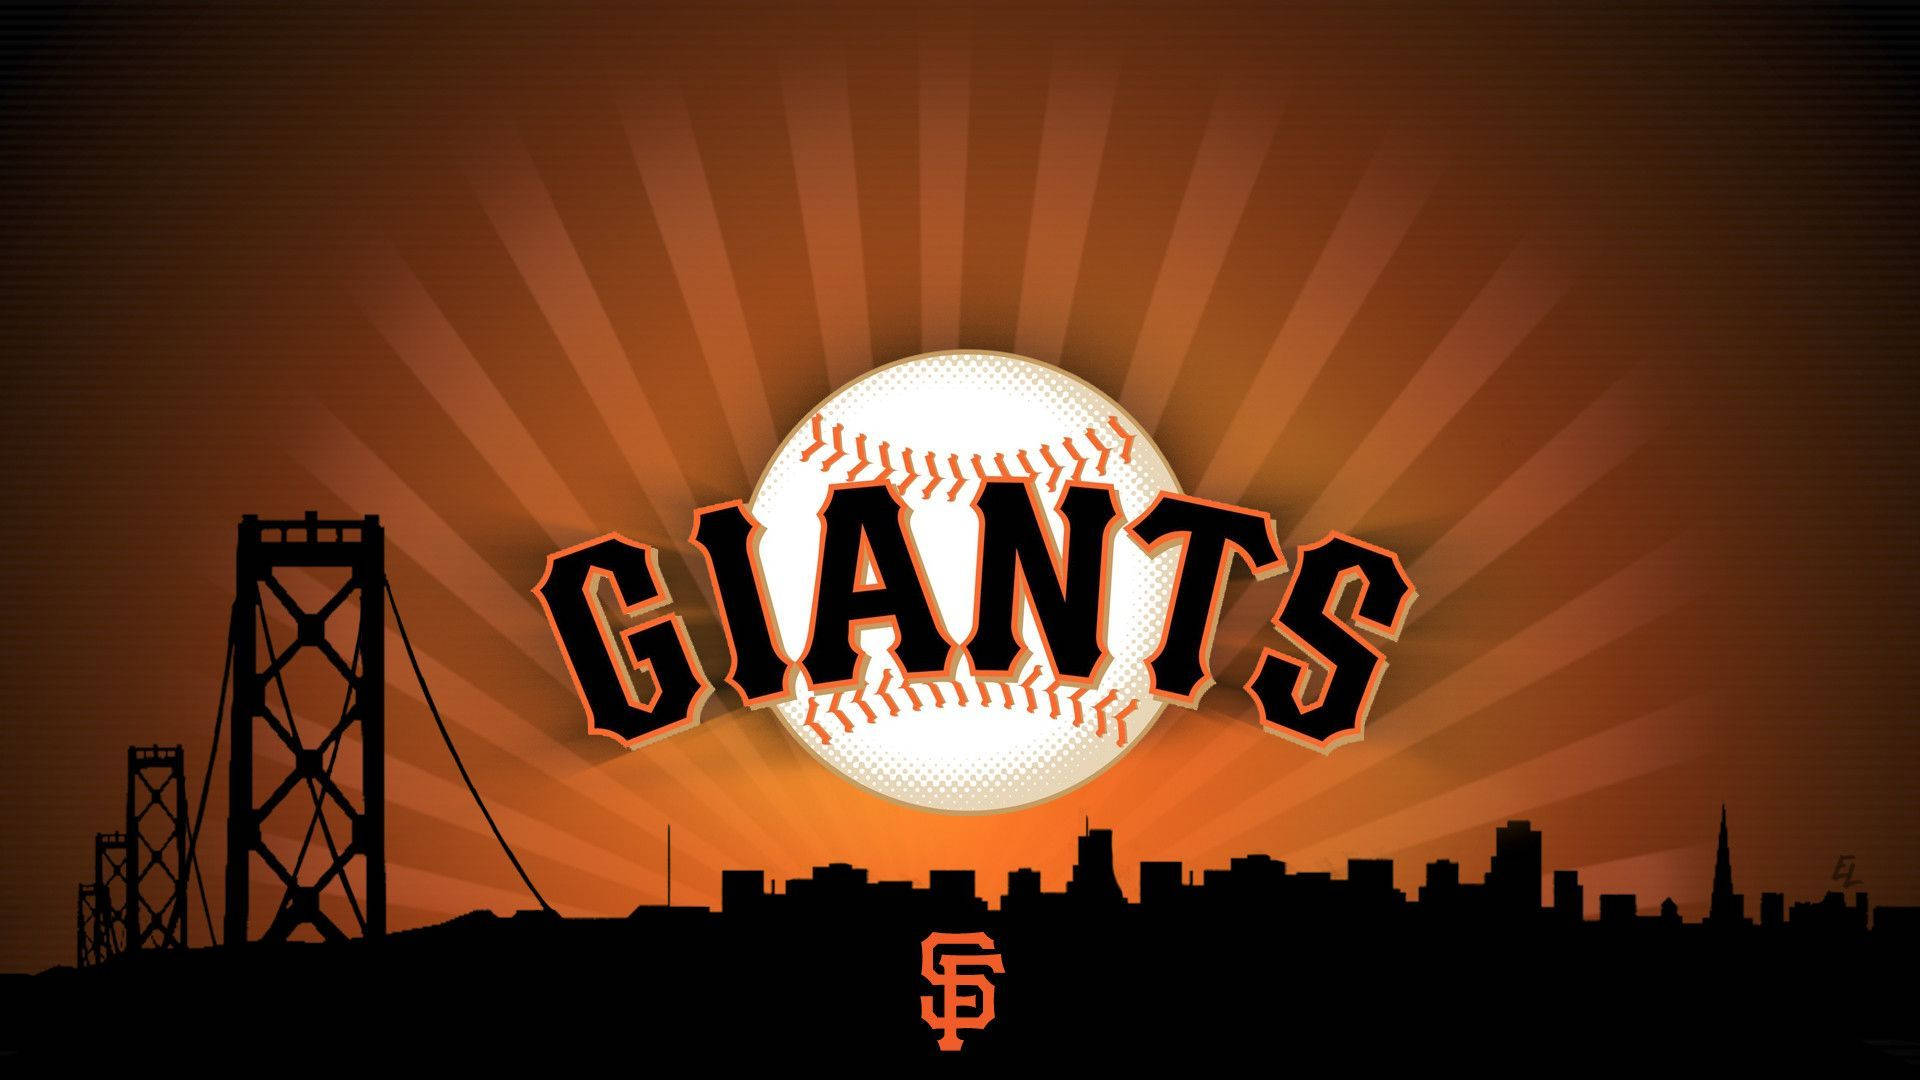 San Francisco Giants Emblem Illuminated Over The City Skyline